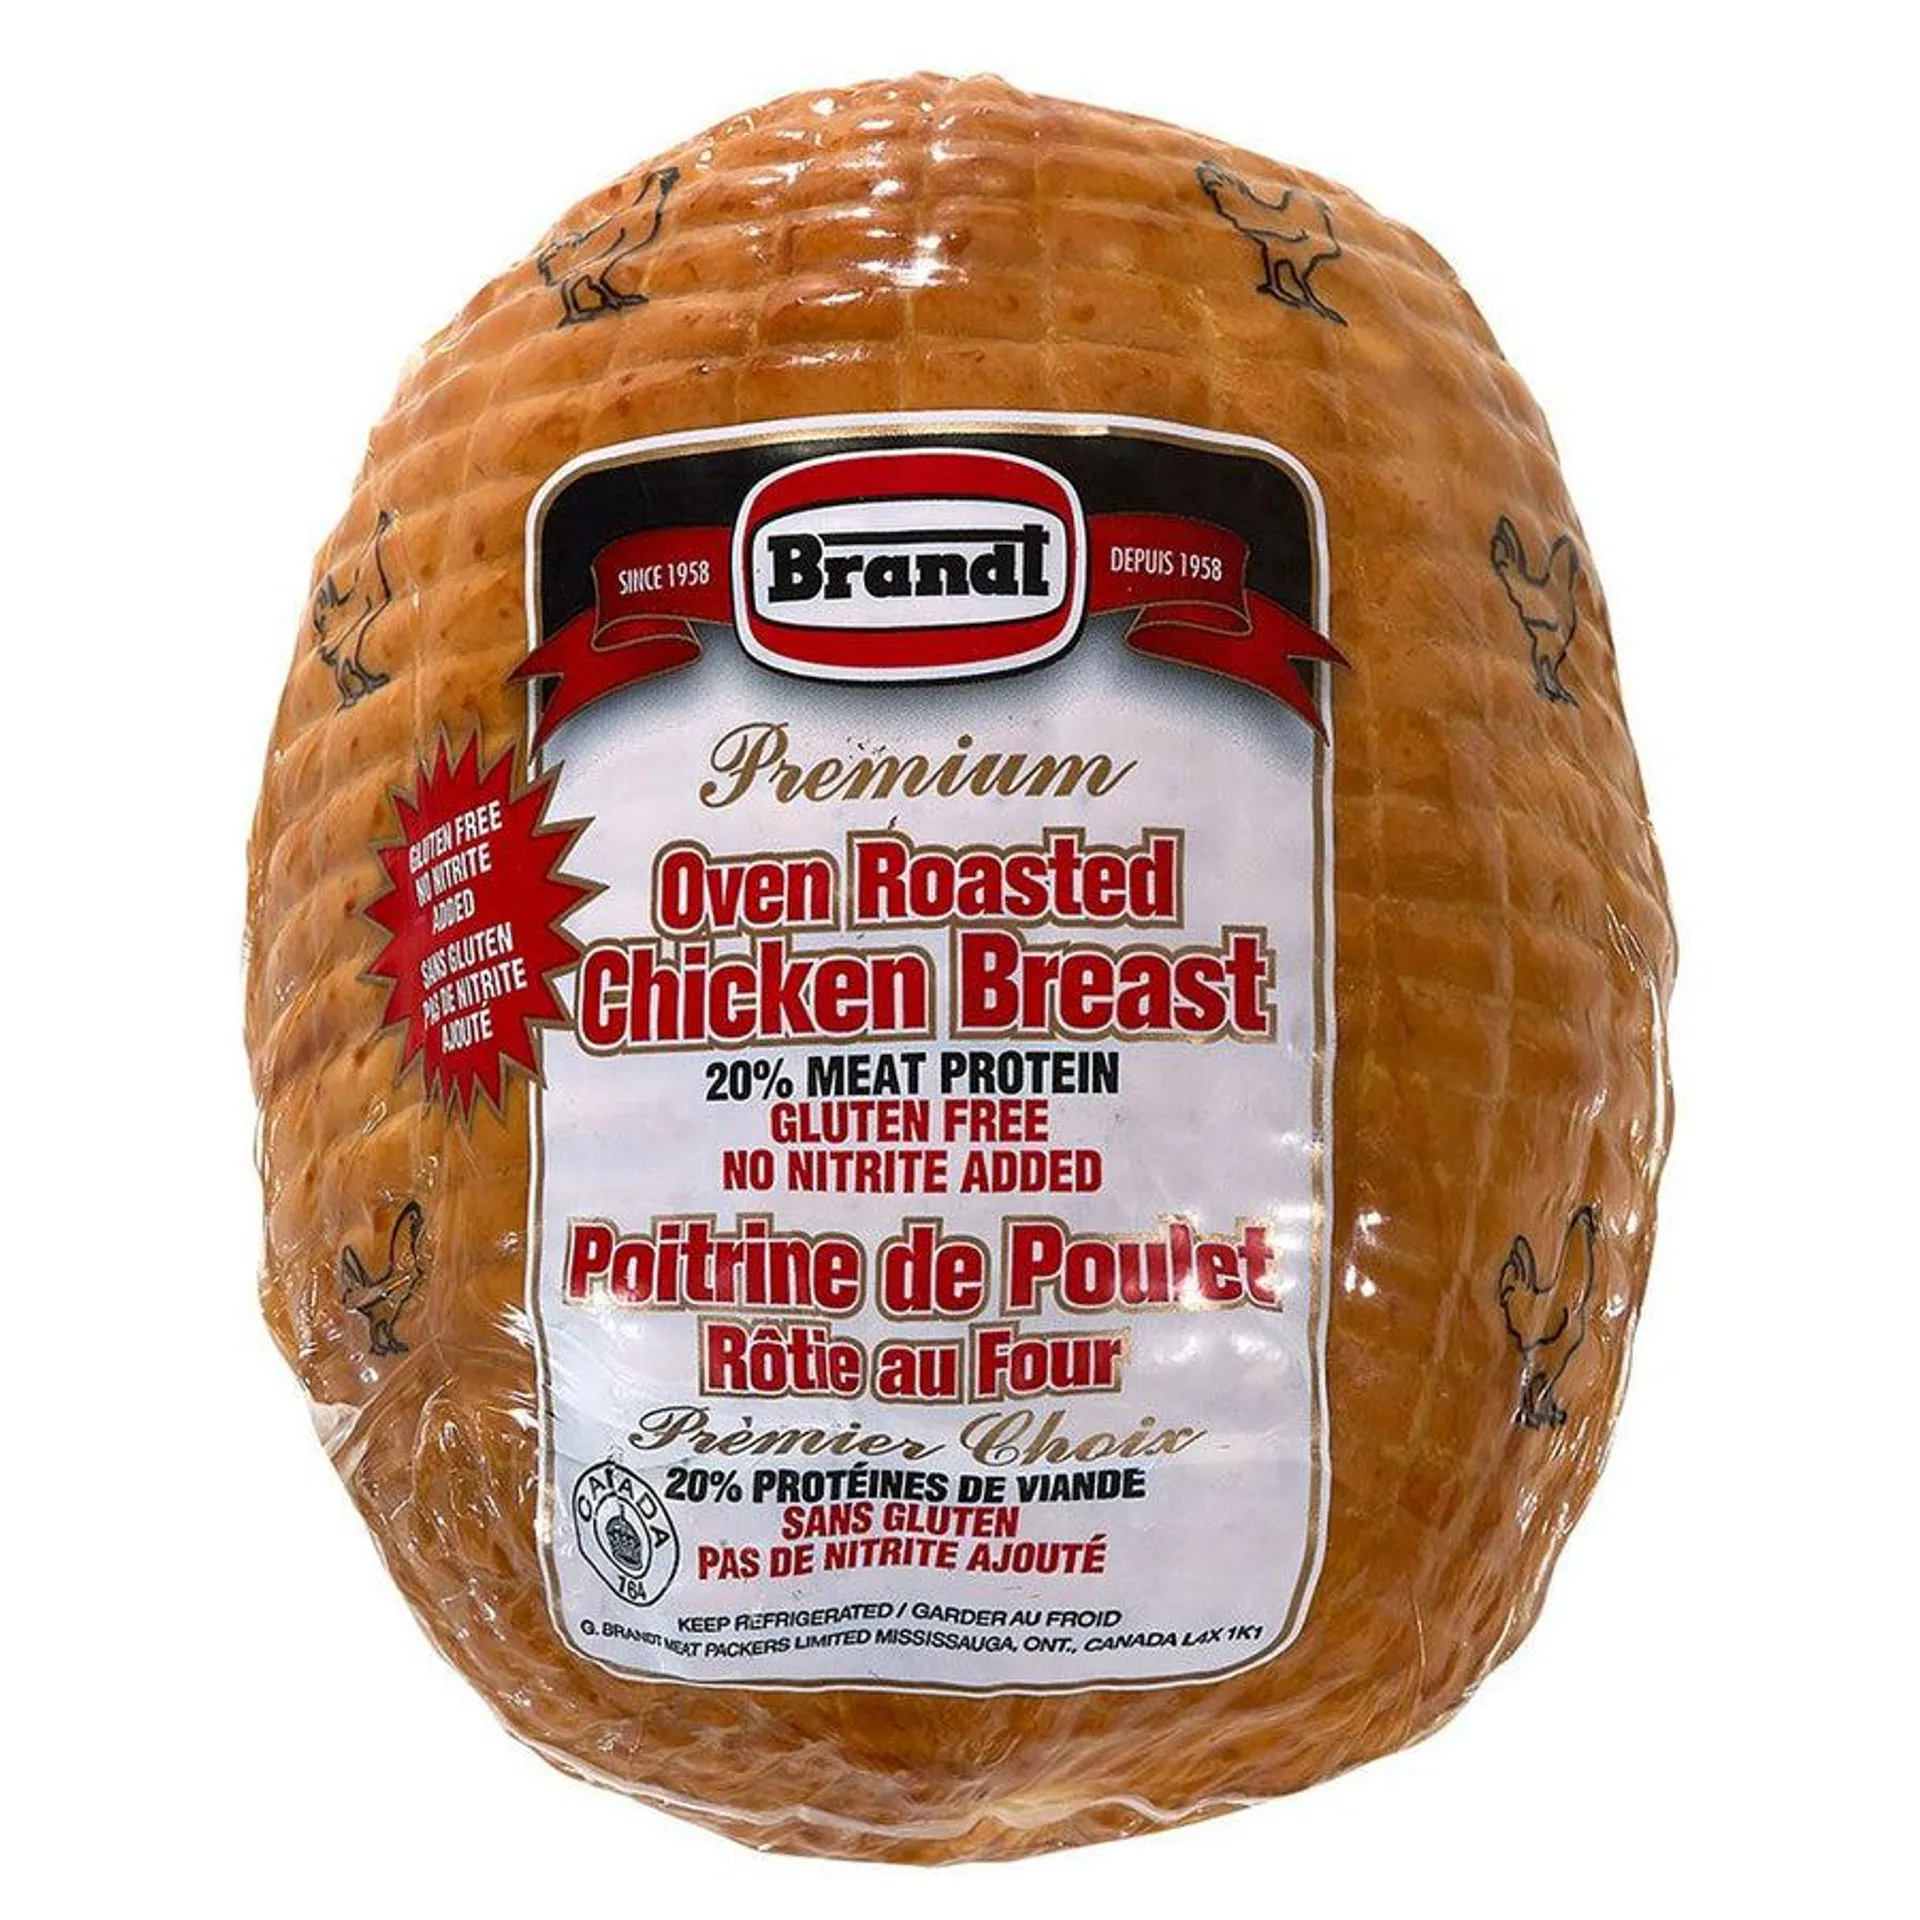 Brandt Oven Roasted Chicken Breast